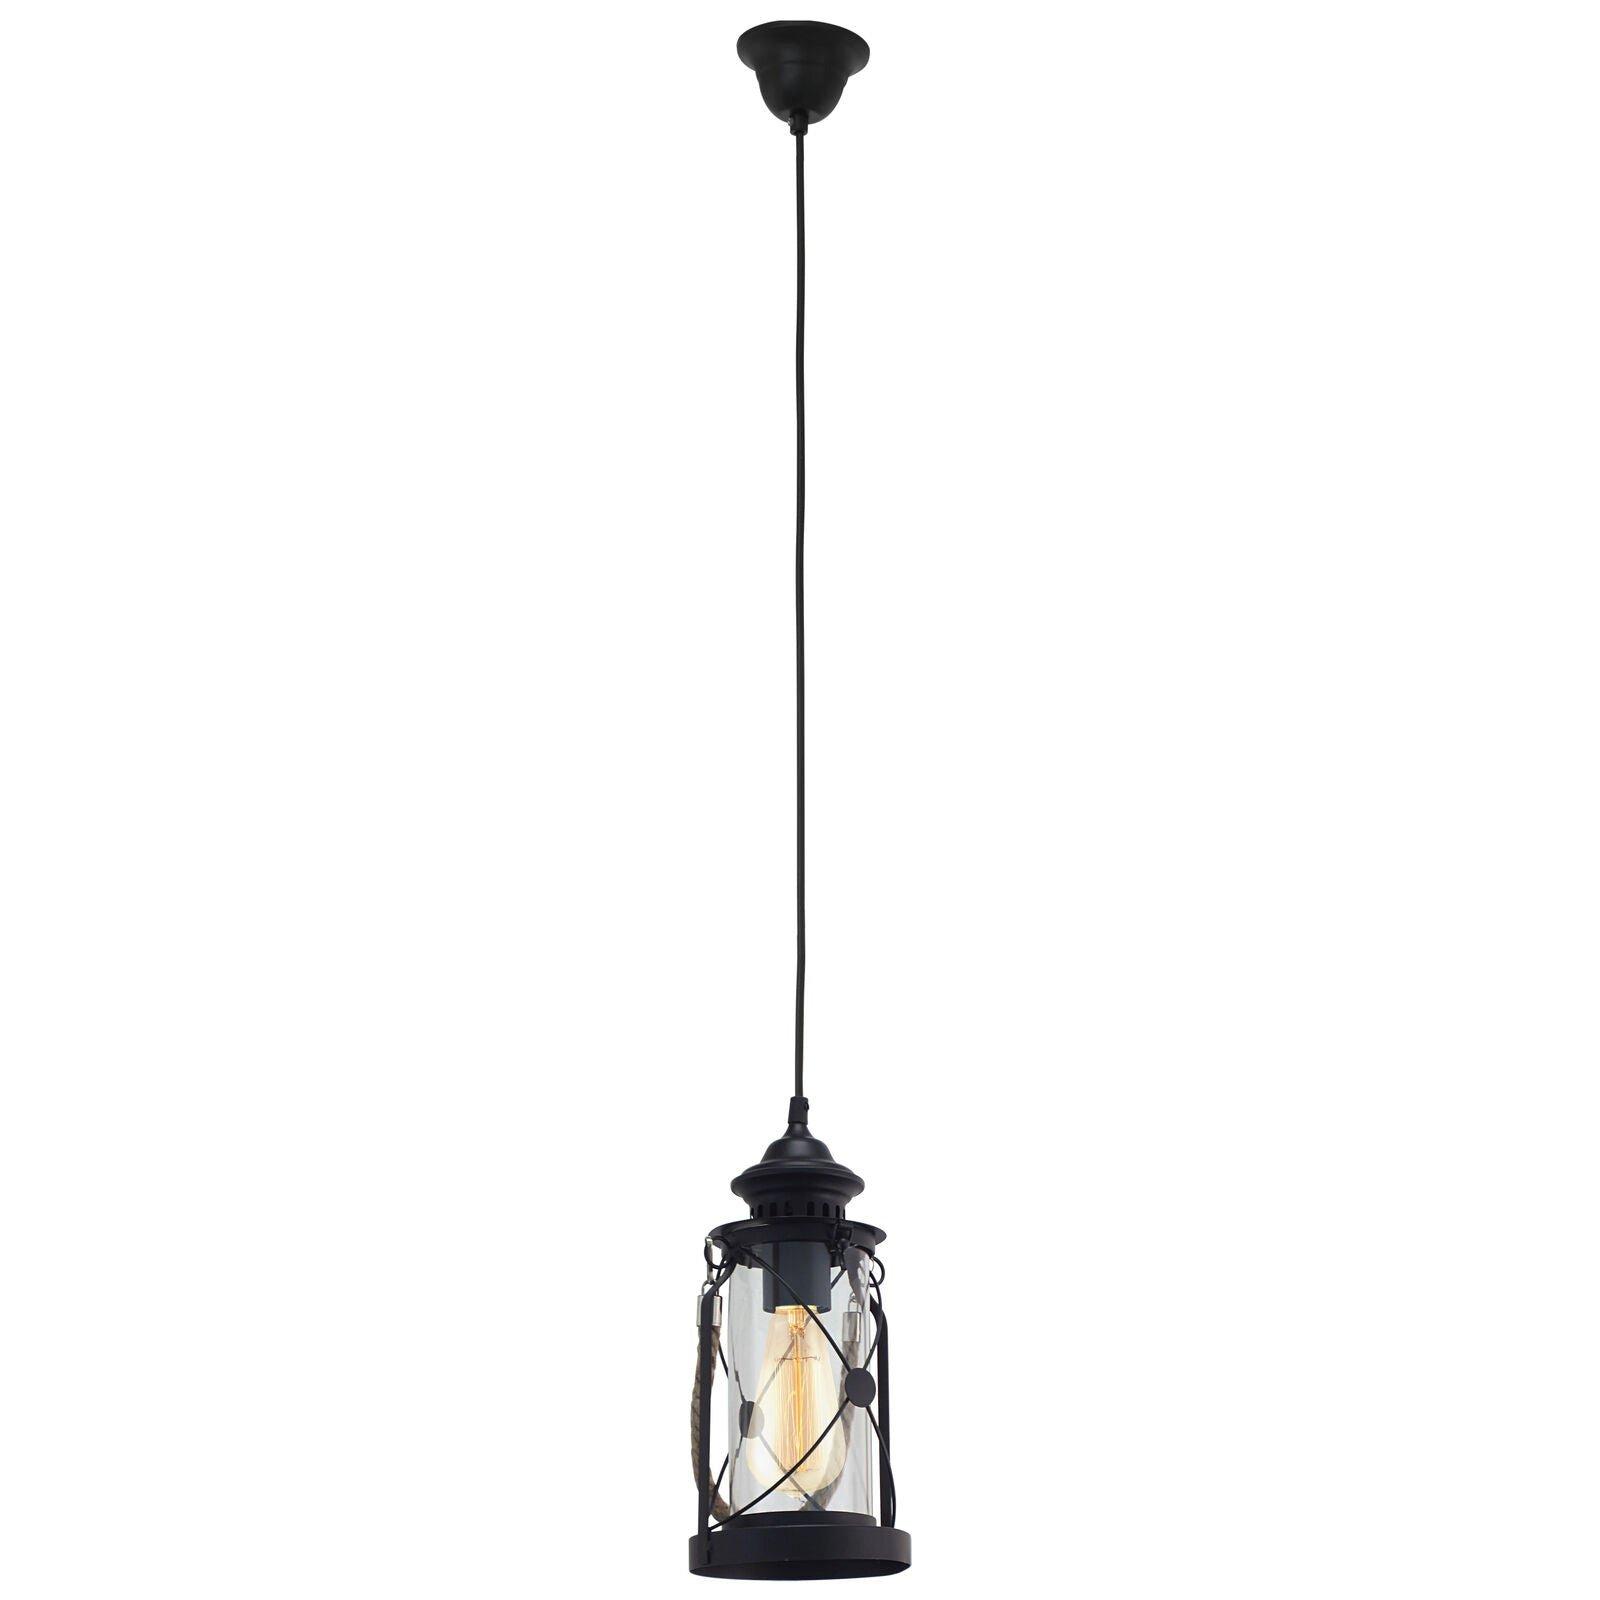 Hanging Ceiling Pendant Light Black Lantern 1 x 60W E27 Hallway Feature Lamp